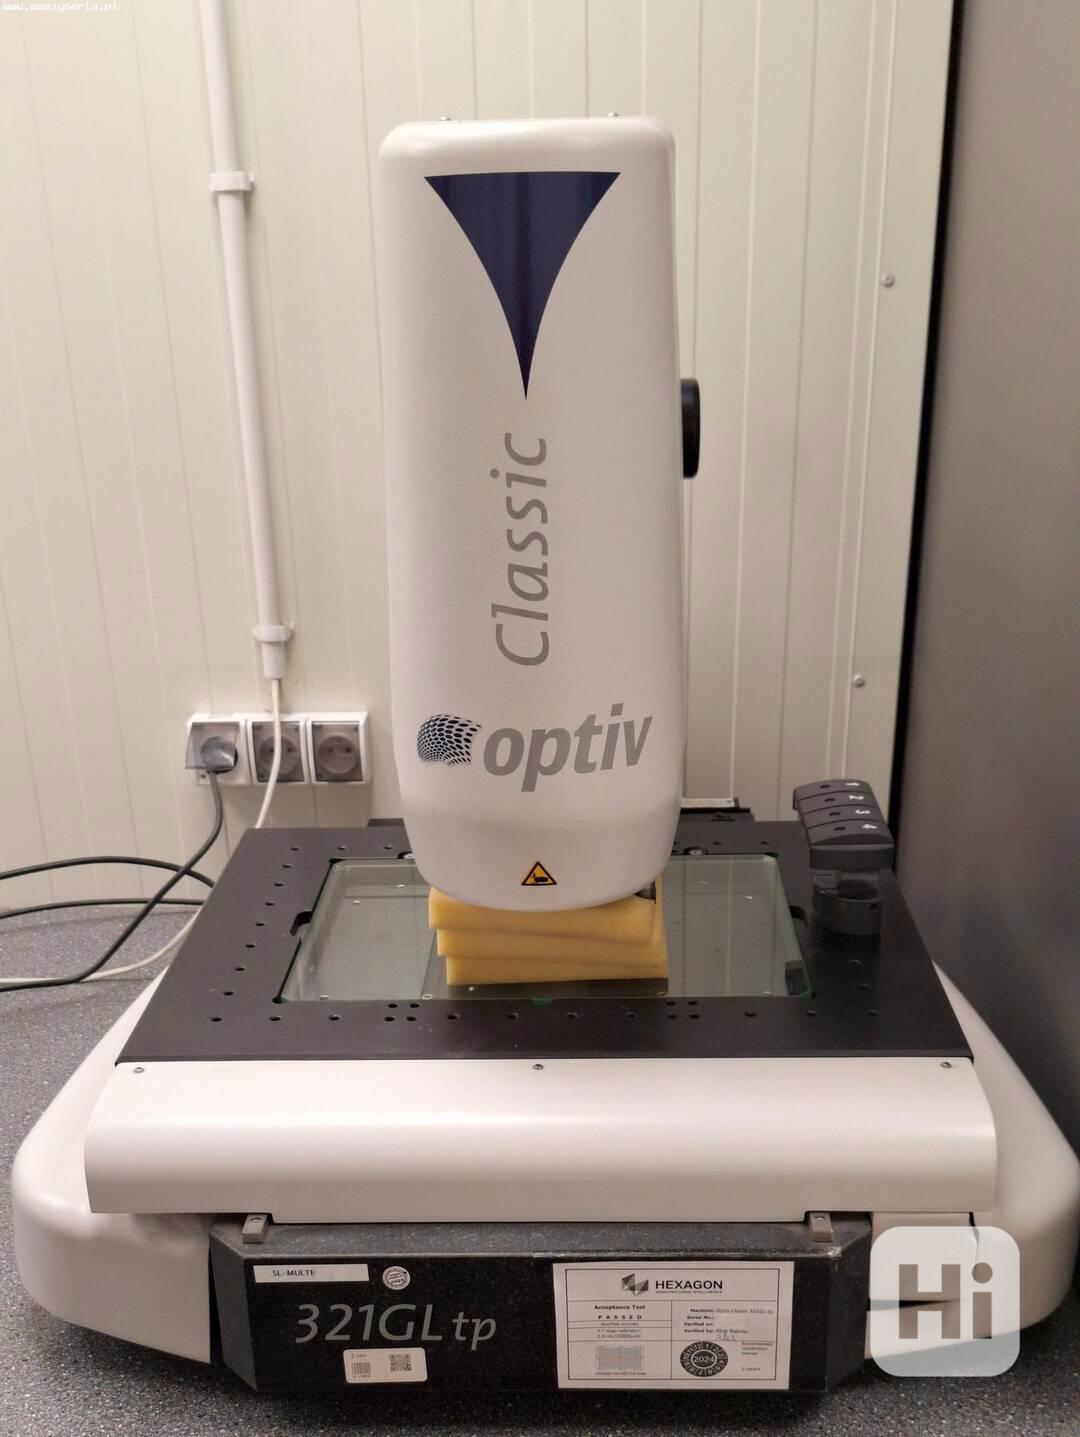 Optický měřicí stroj HEXAGON OPTIV CLASSIC 321 GL tp - foto 1